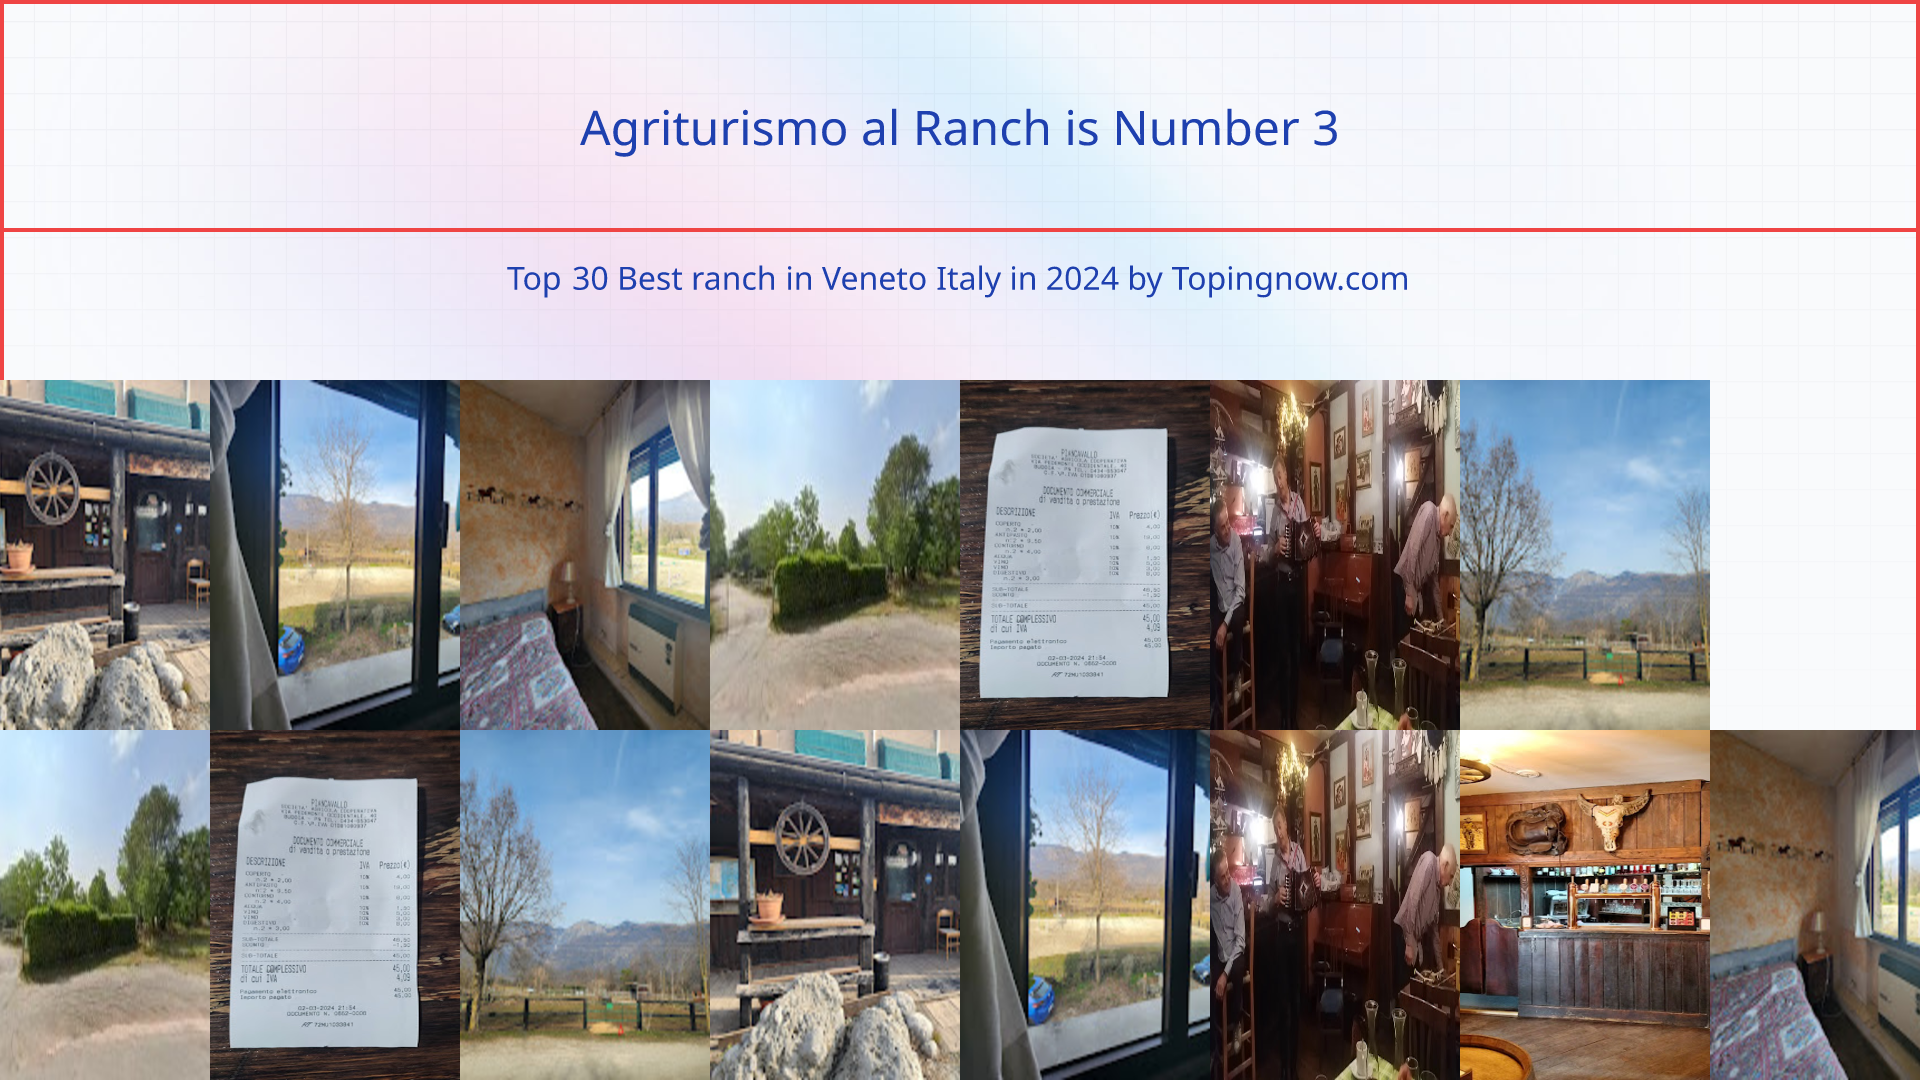 Agriturismo al Ranch: Top 30 Best ranch in Veneto Italy in 2024